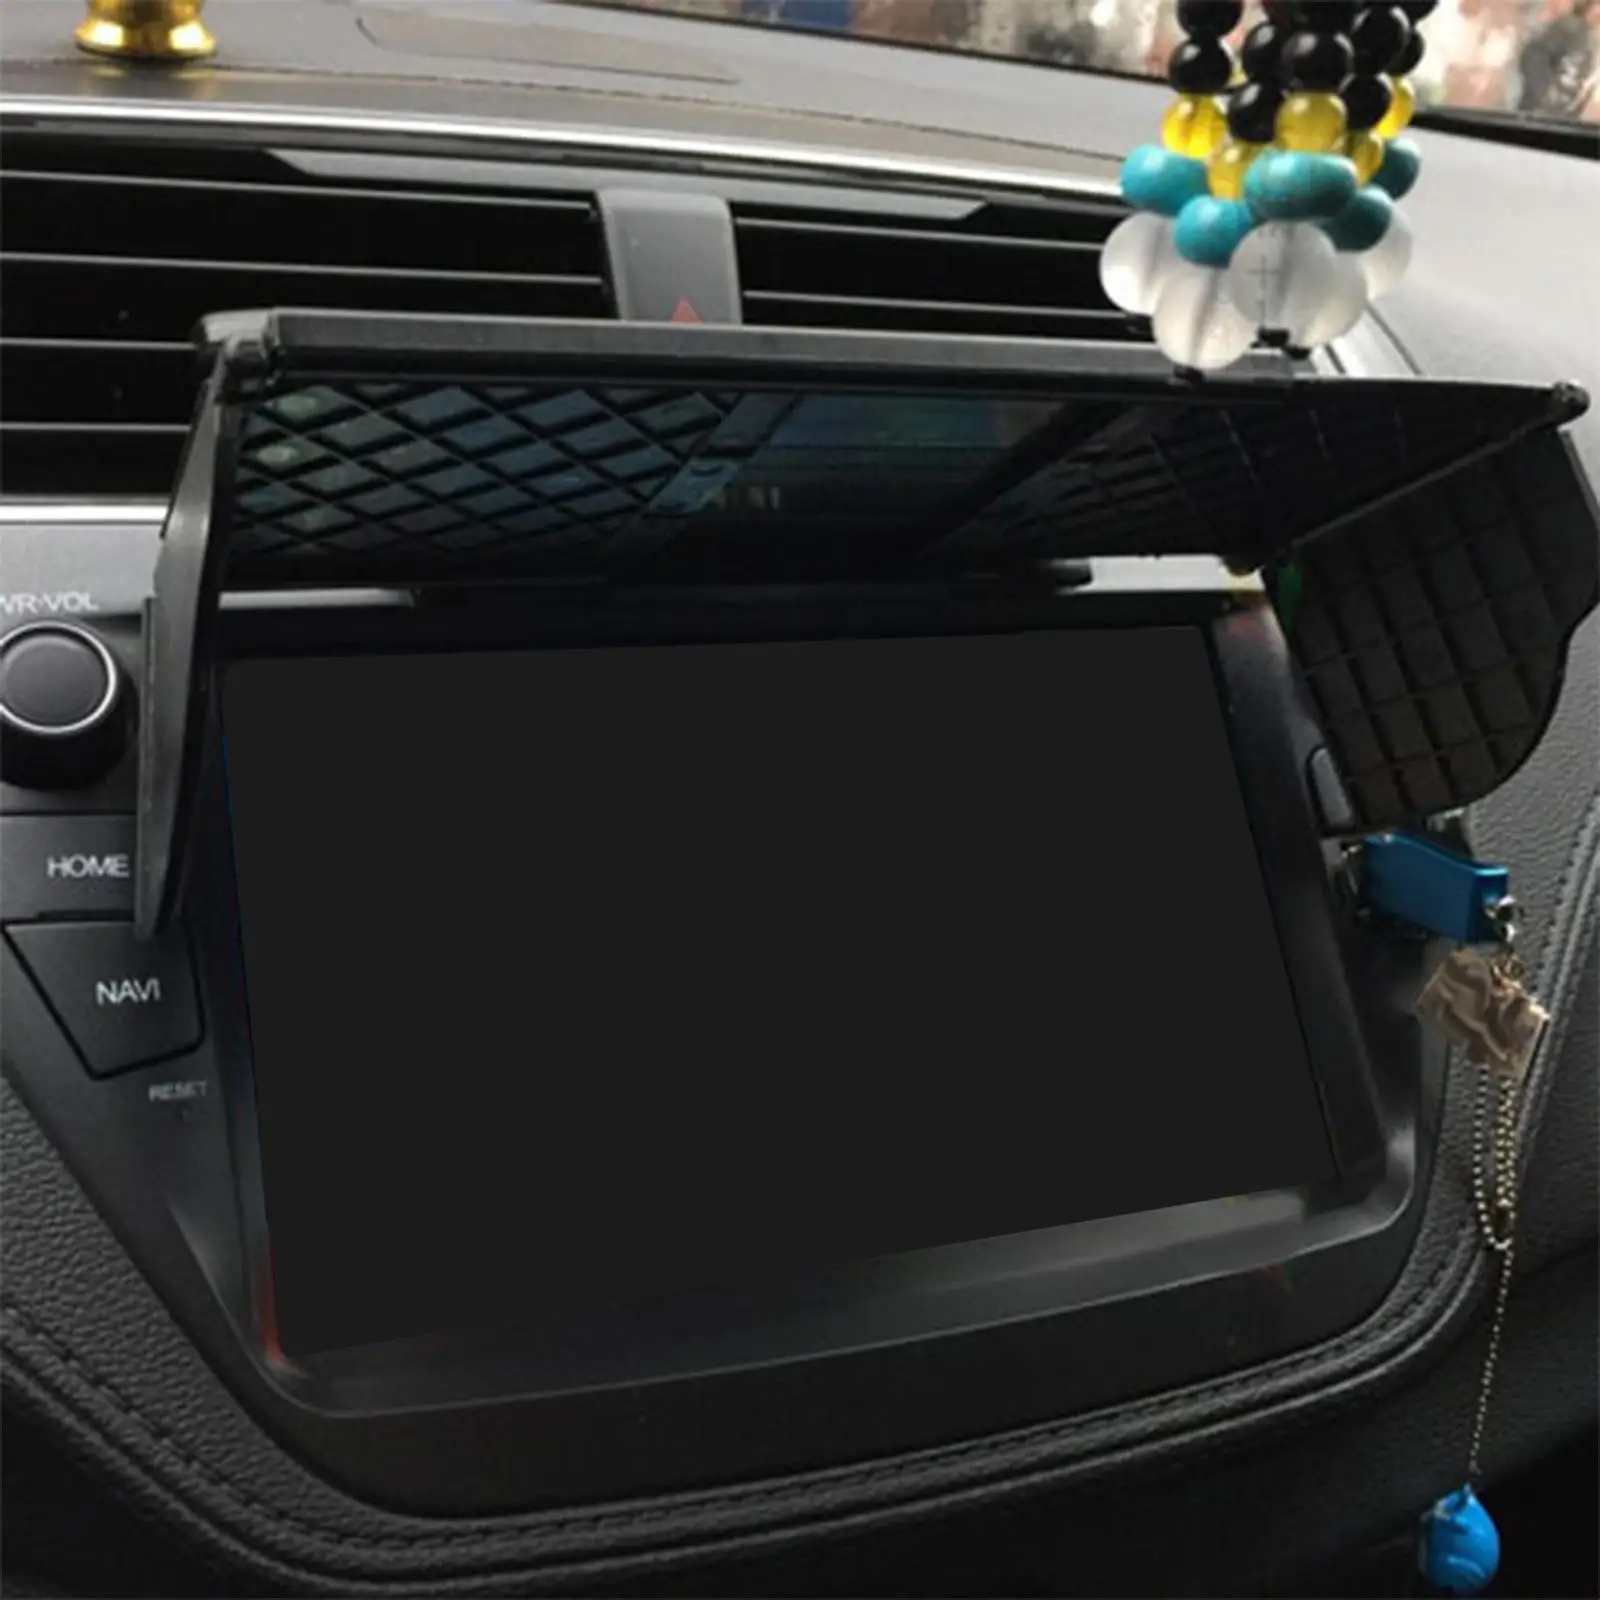 GPS Sunshade Vehicle Car Accessories Anti Reflective Block Sunlight Screen Visor Protector Hood Cover